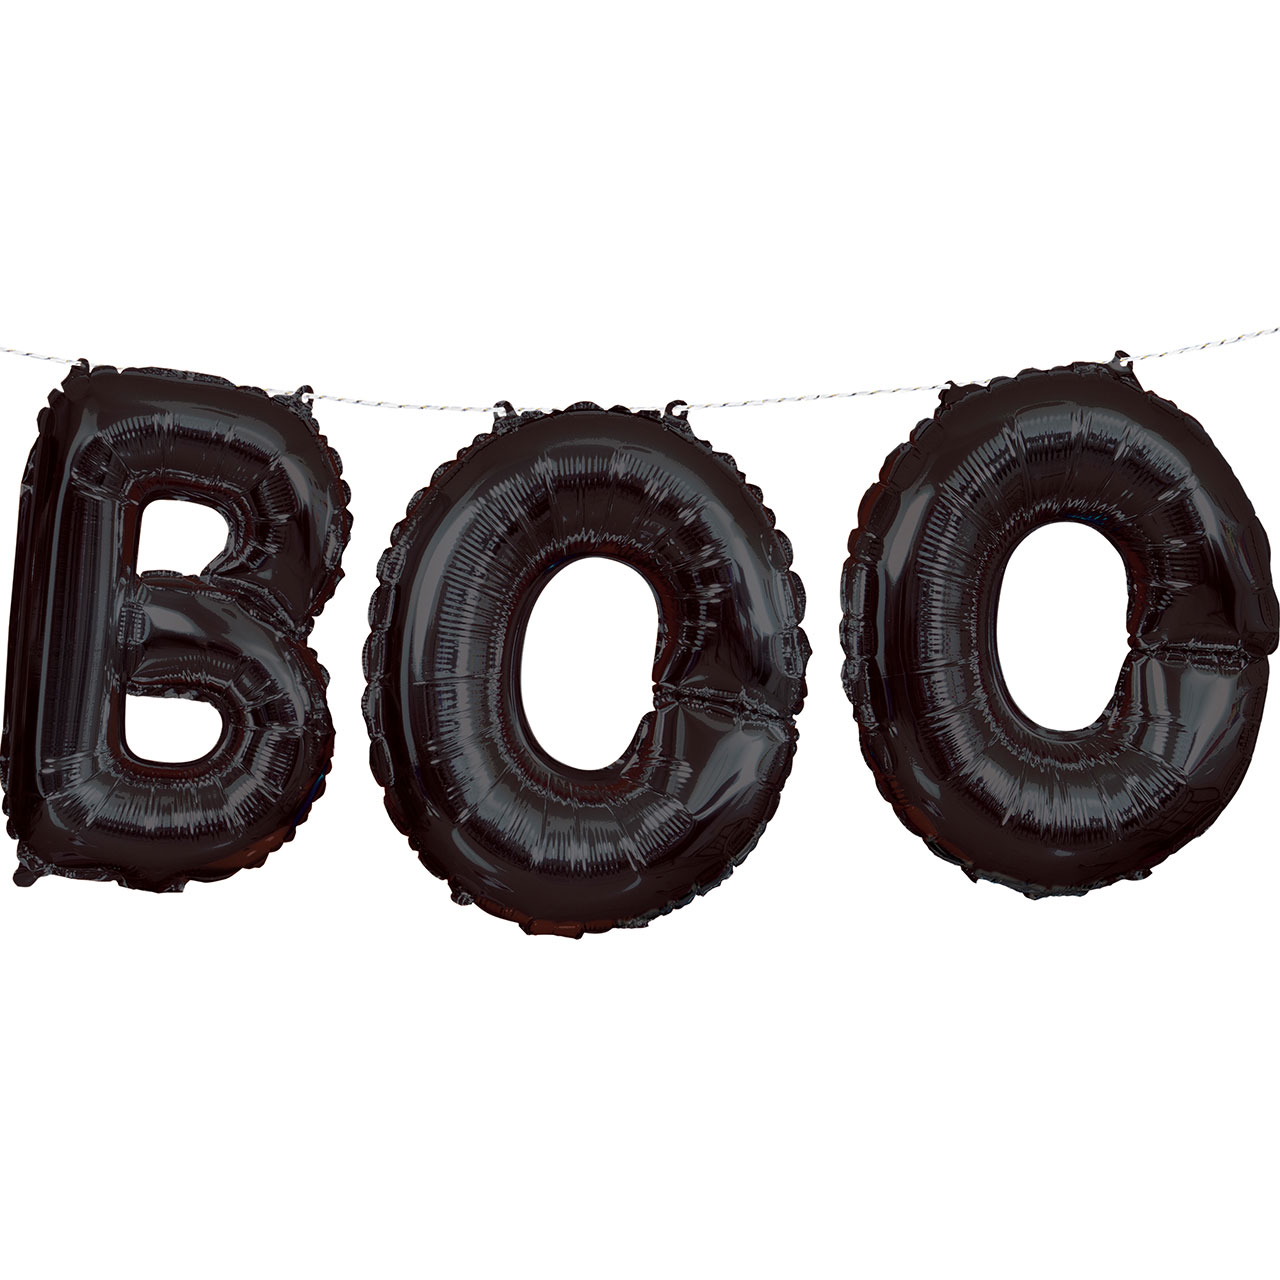 Balloon Letter Banner -  Boo